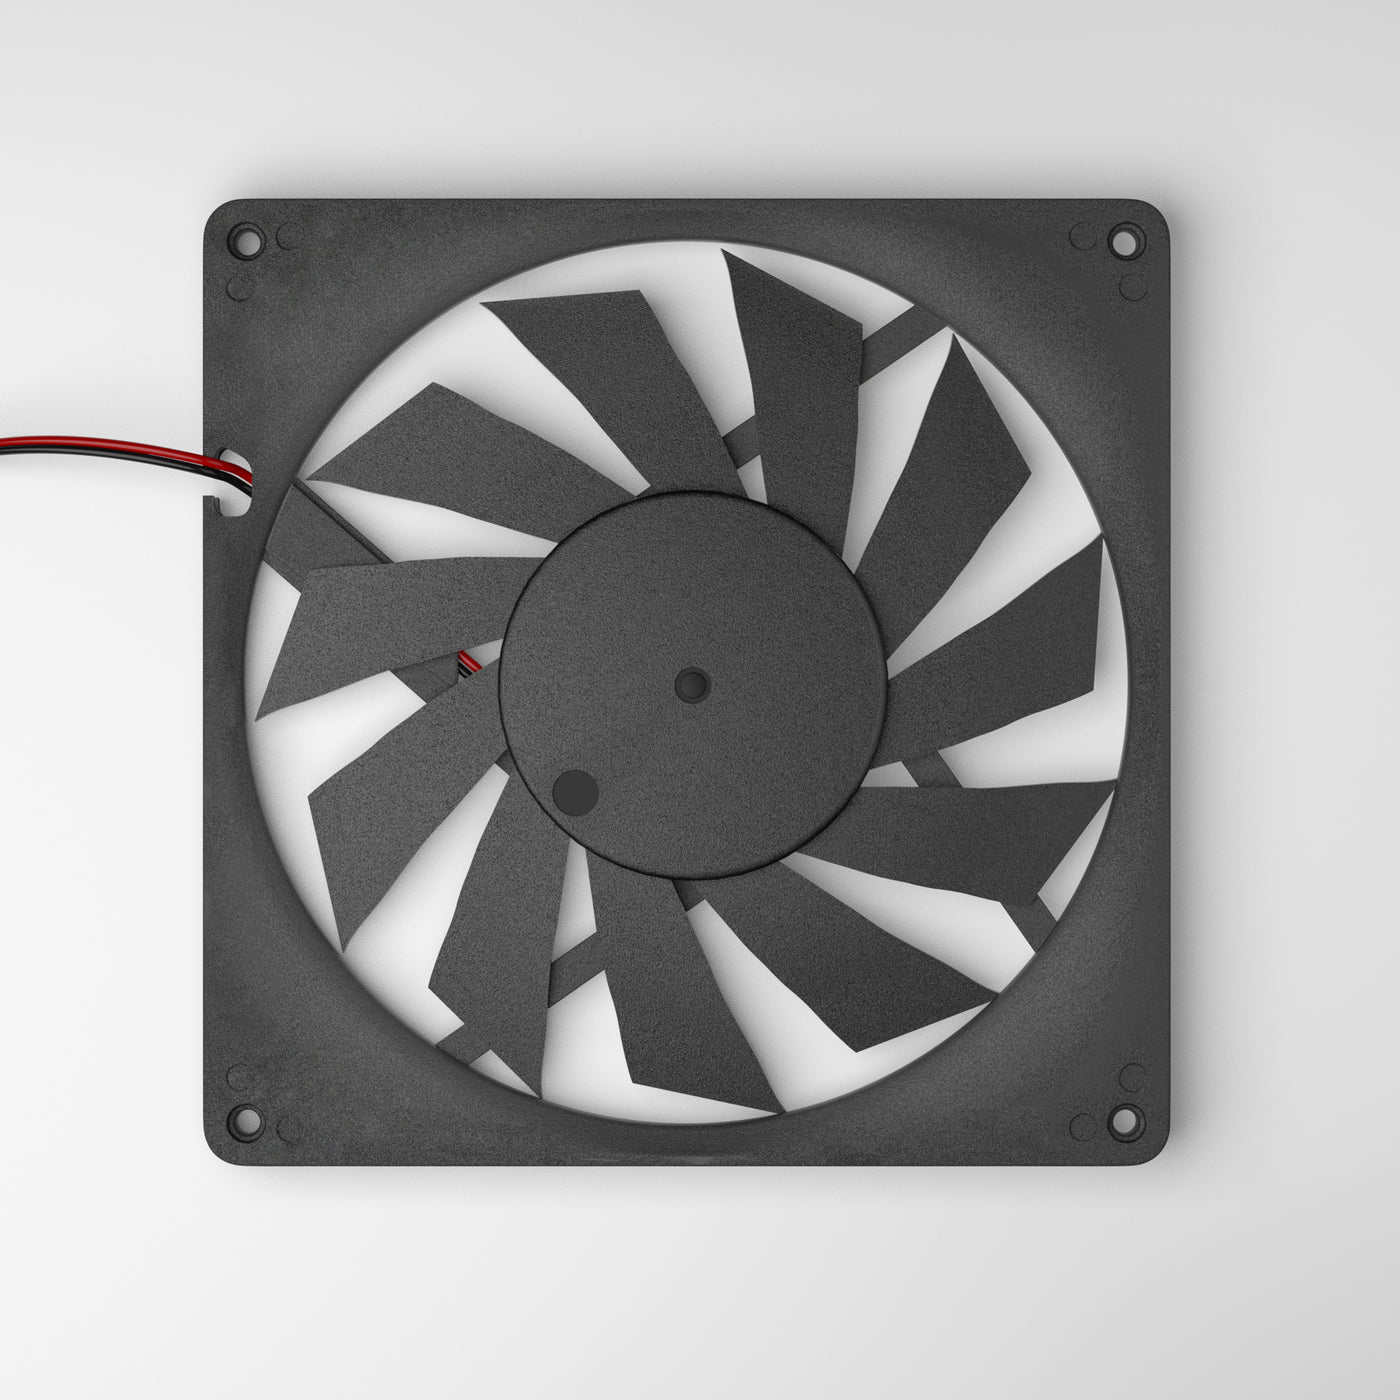 3D Printer TX Mainboard 8010 Cooling Fan